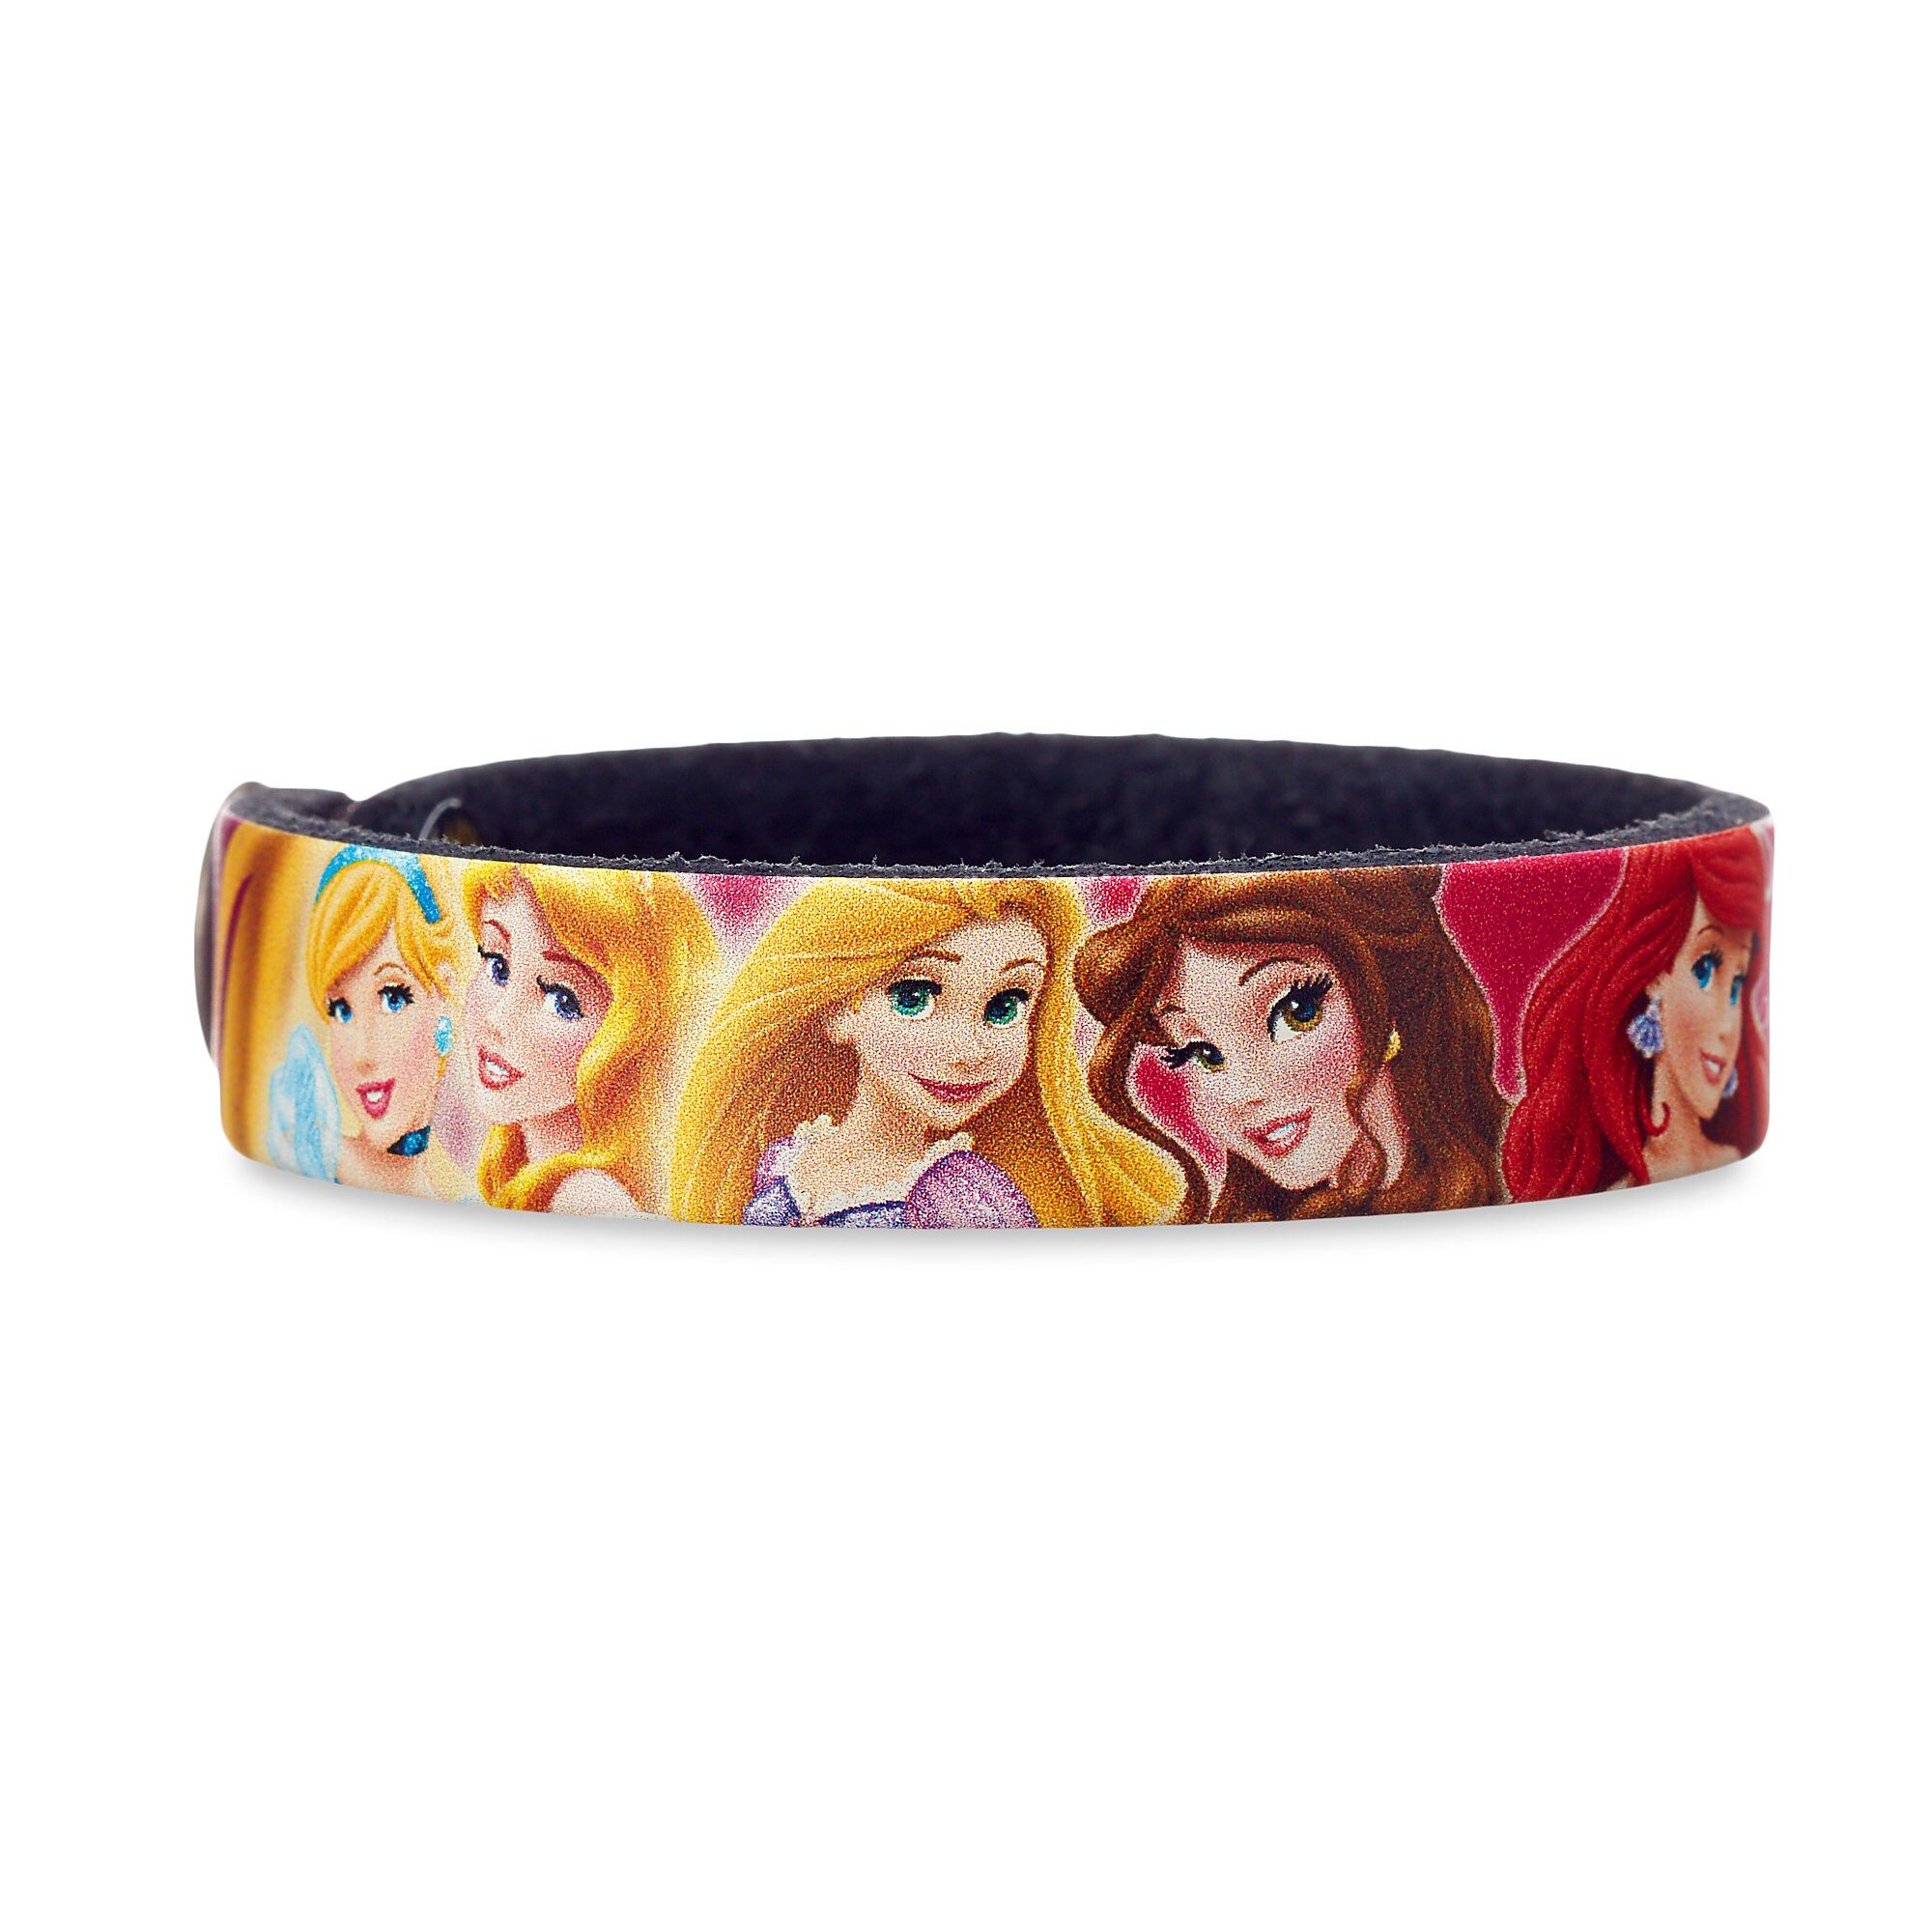 Disney Princess Leather Bracelet - Personalizable